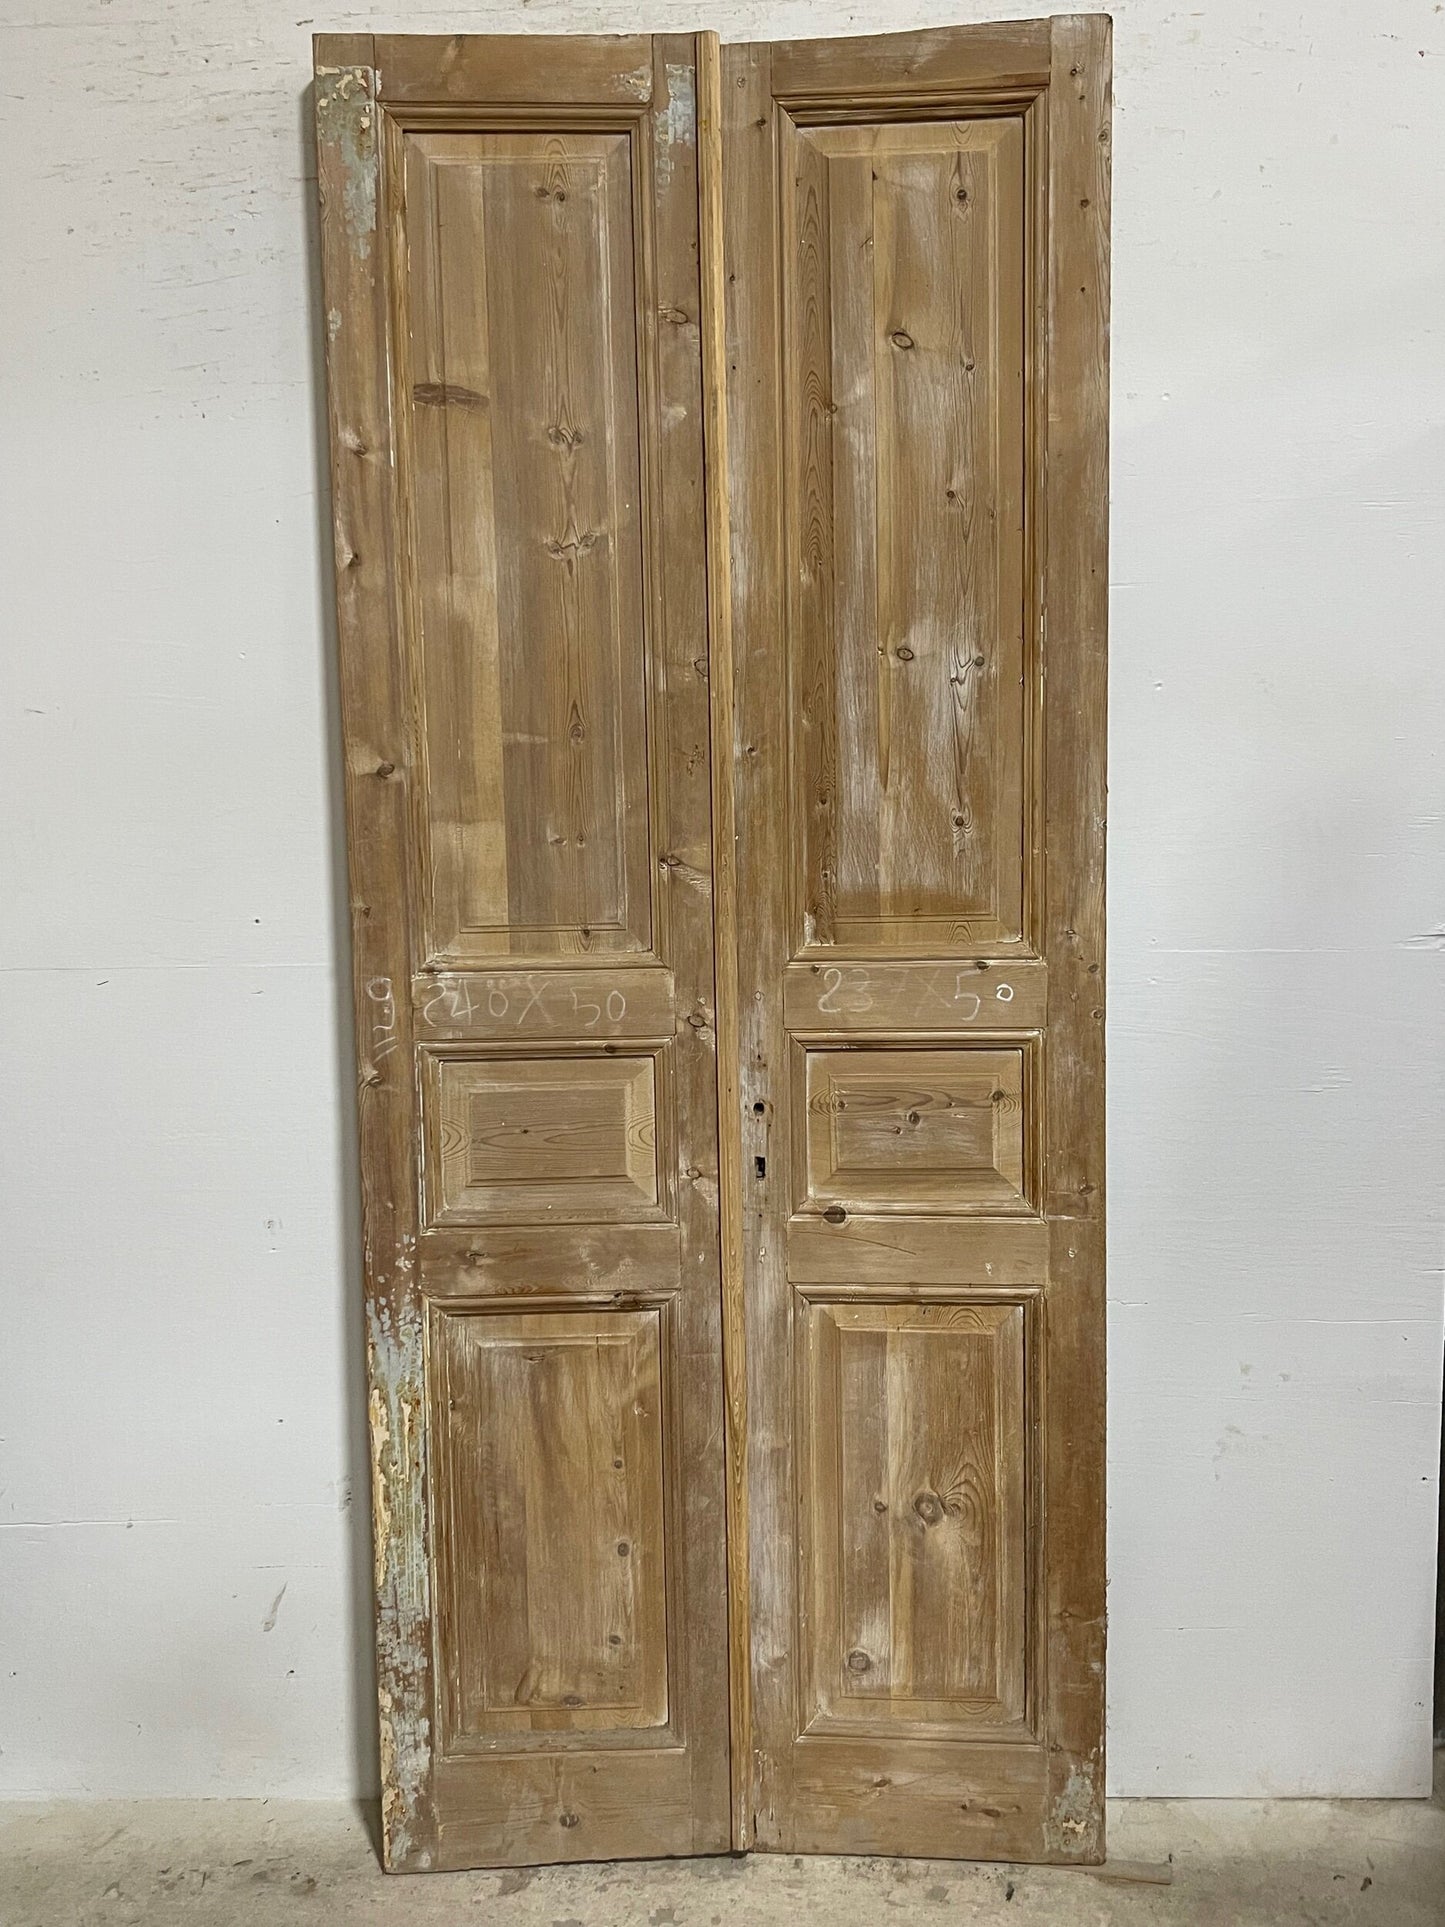 Antique French panel doors (93.75x38.75) I188